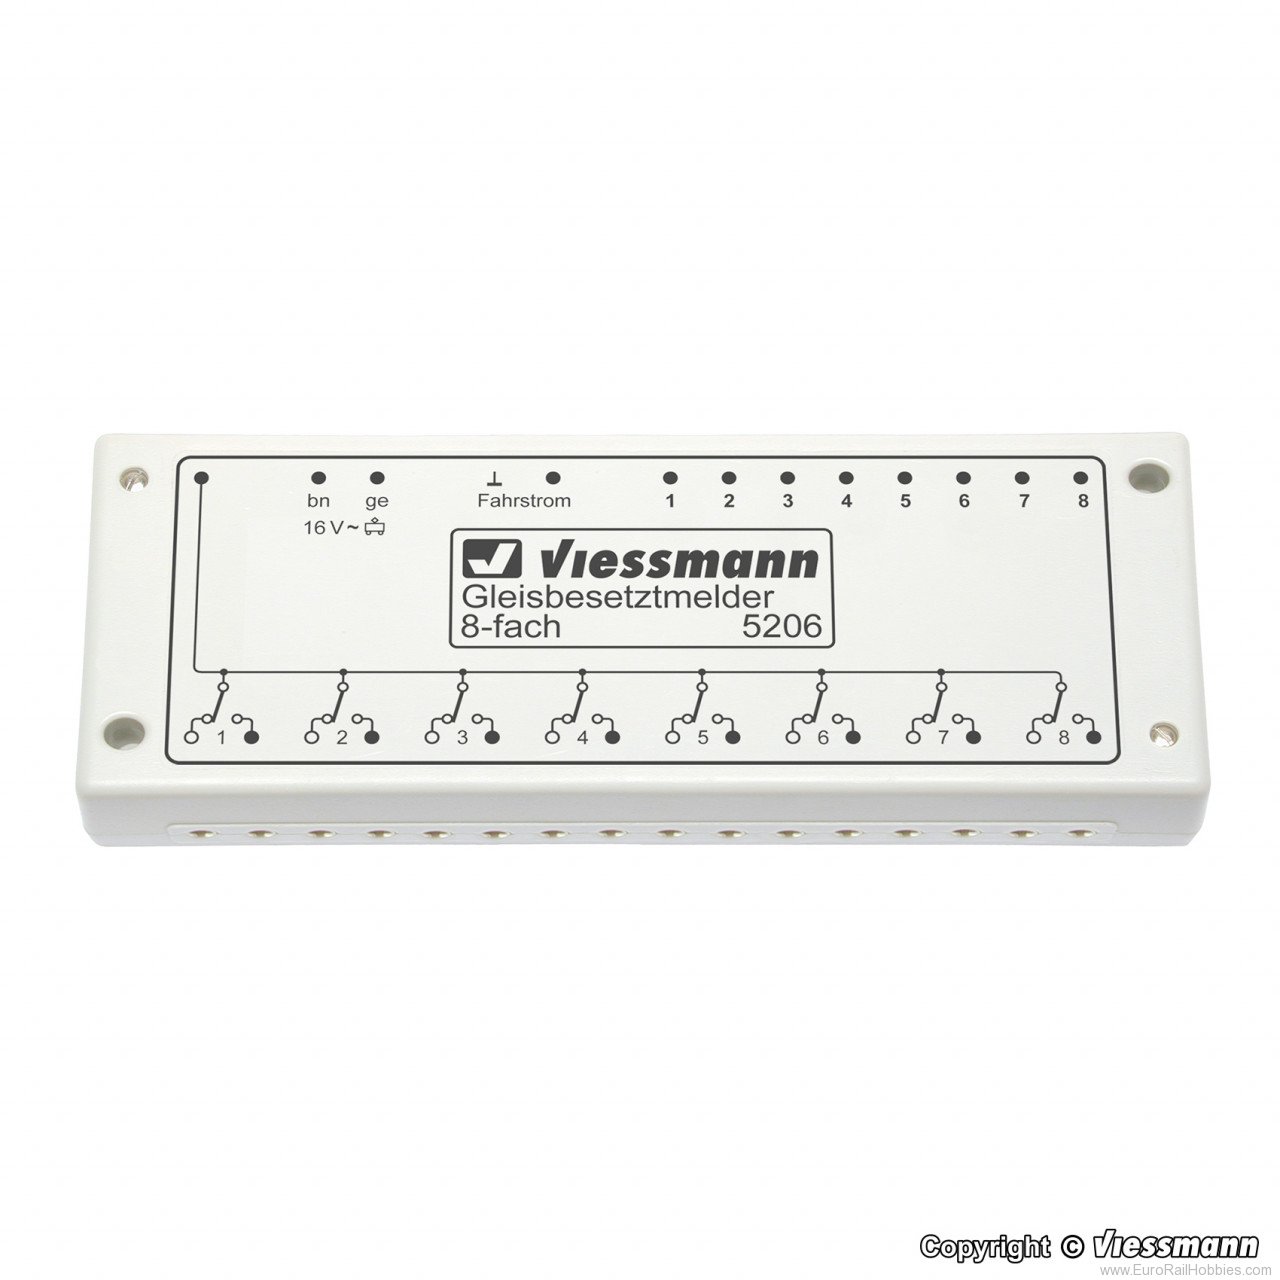 Viessmann 5206 Track occupancy detector, 8-sections